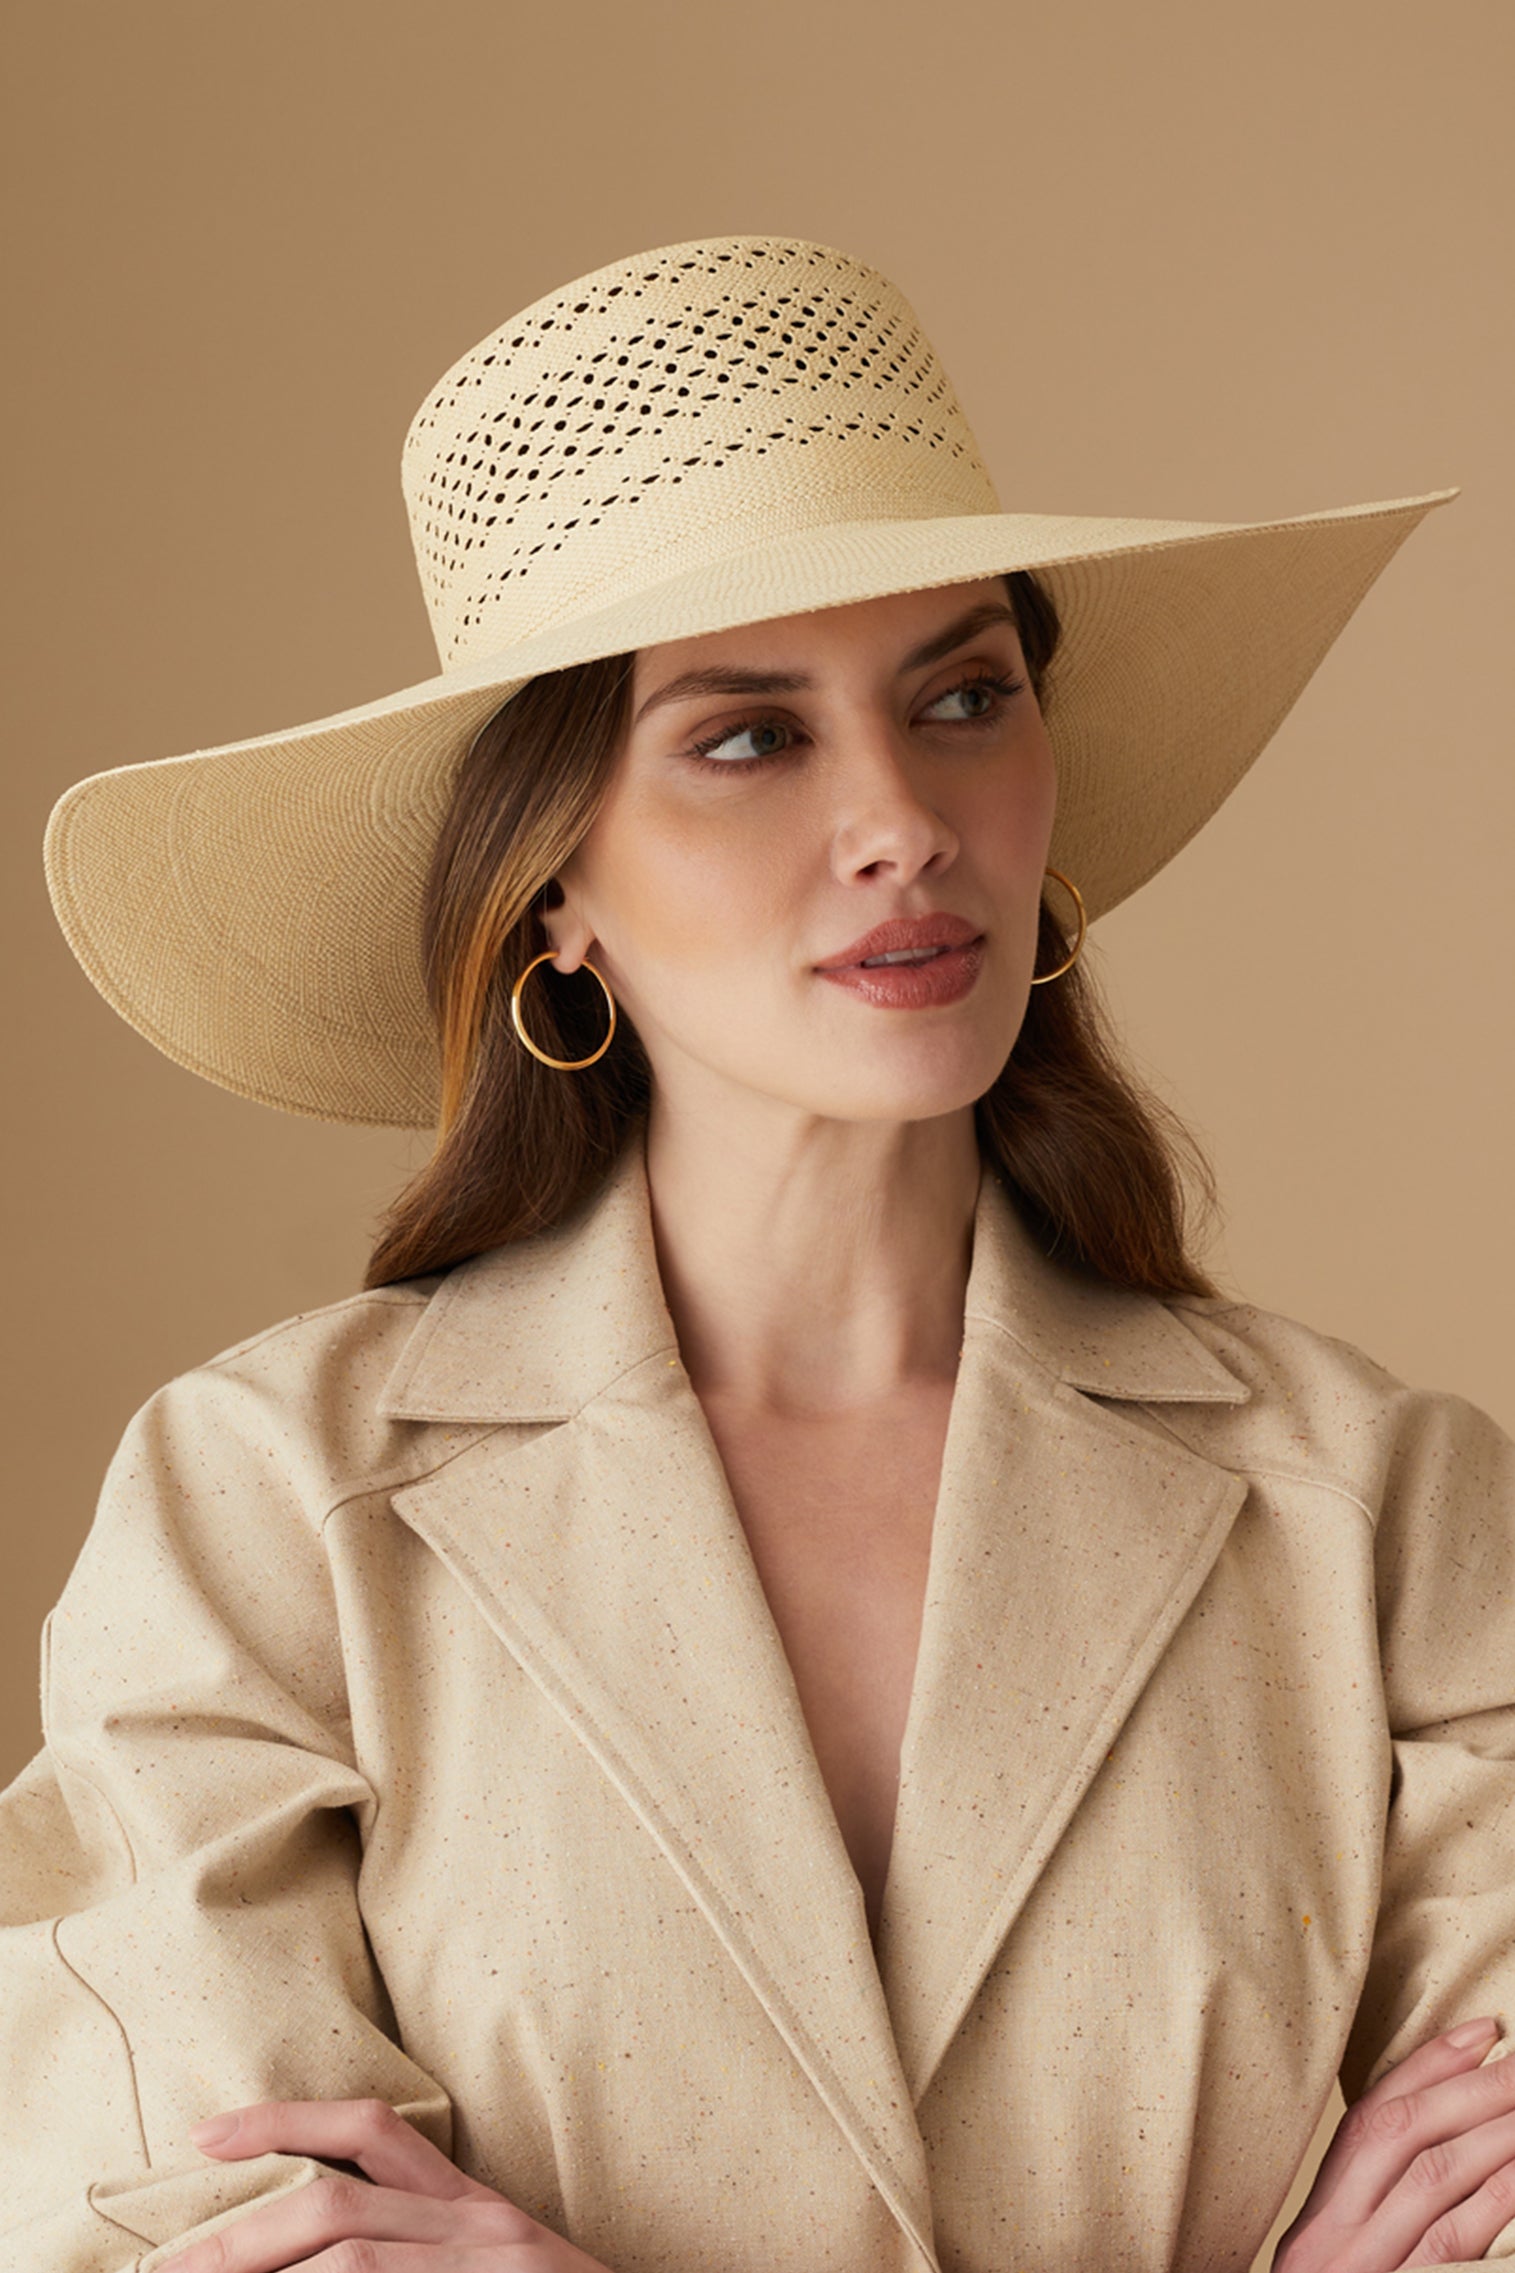 Banbury Open Weave Sun Hat - Panamas, Straw and Sun Hats for Women - Lock & Co. Hatters London UK